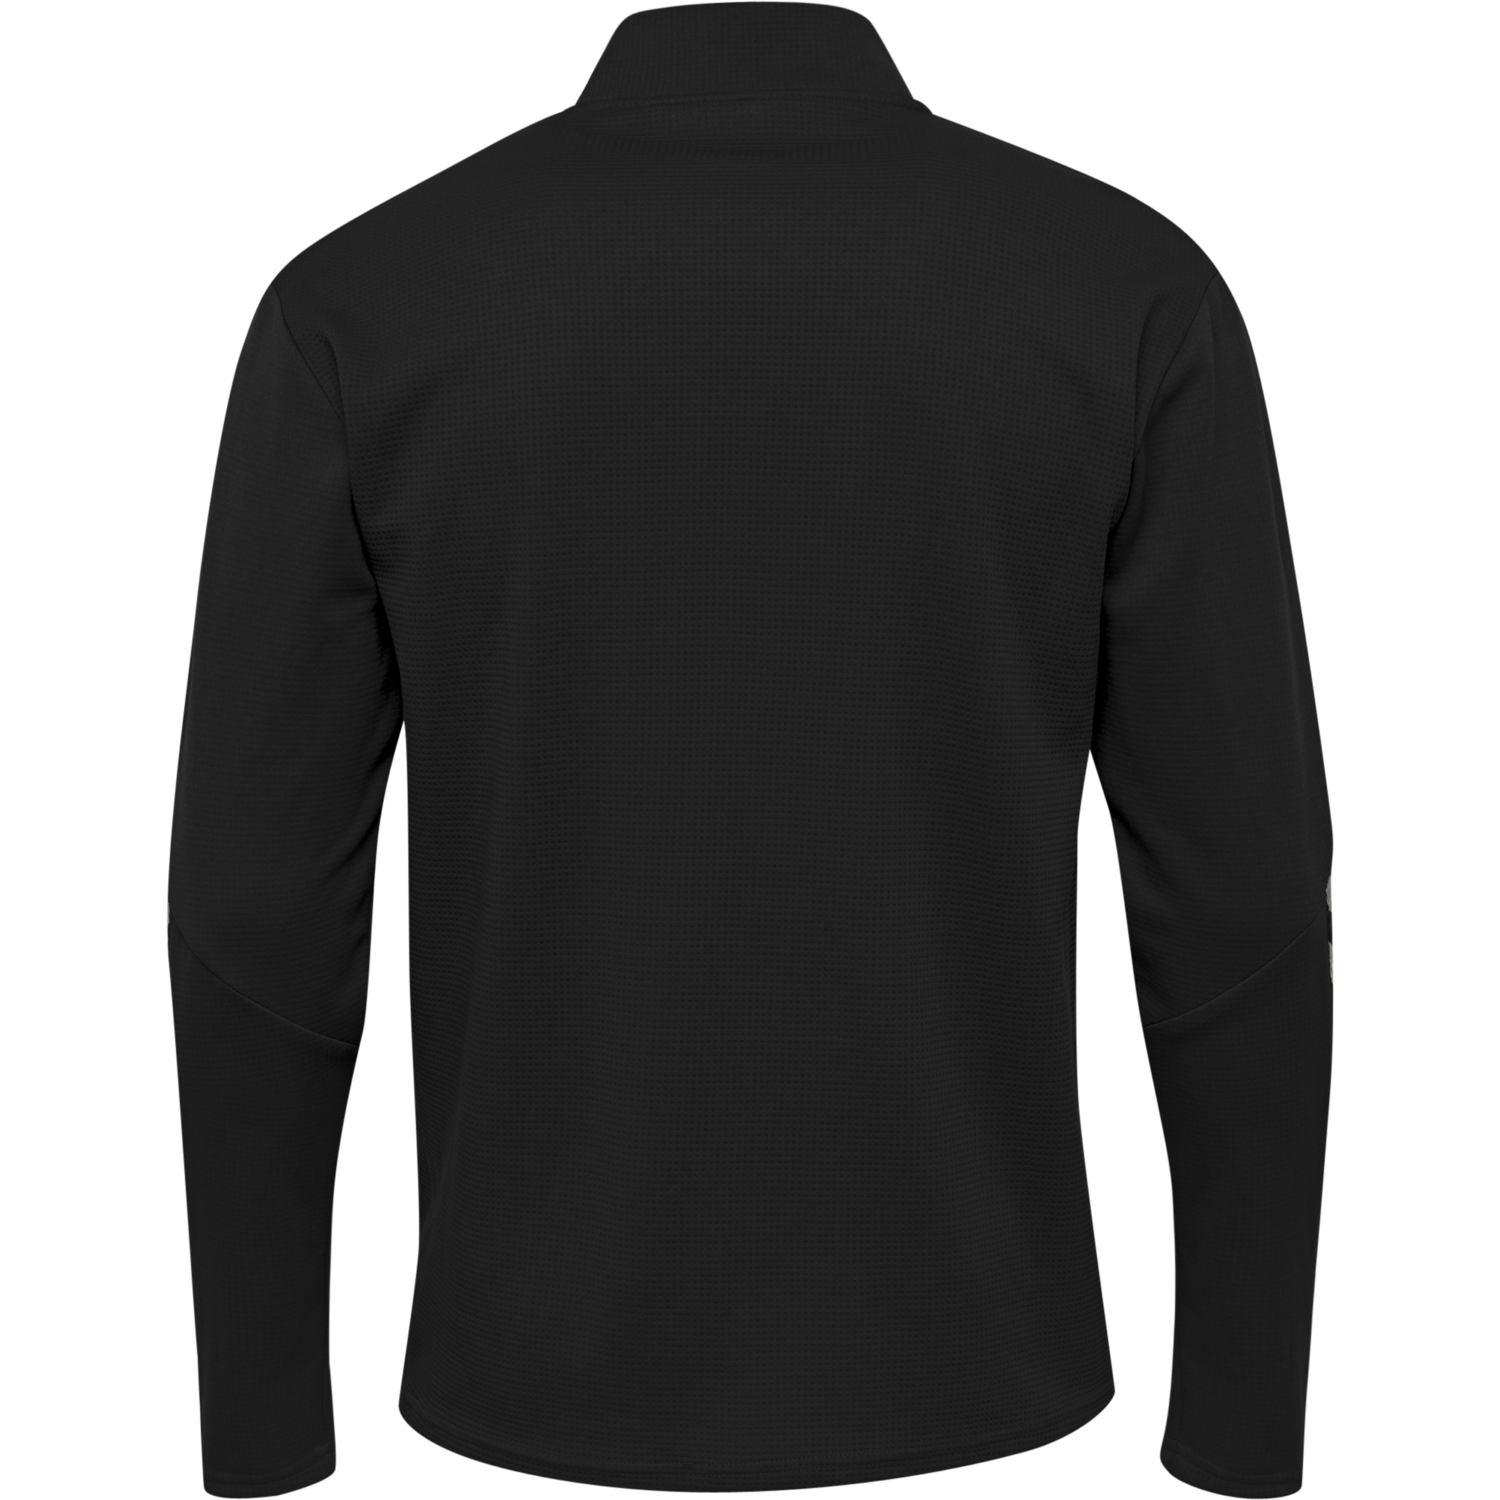 Details about   Hummel Football Kids Sport Training Half Zip Sweatshirt Long Sleeve Track Top 